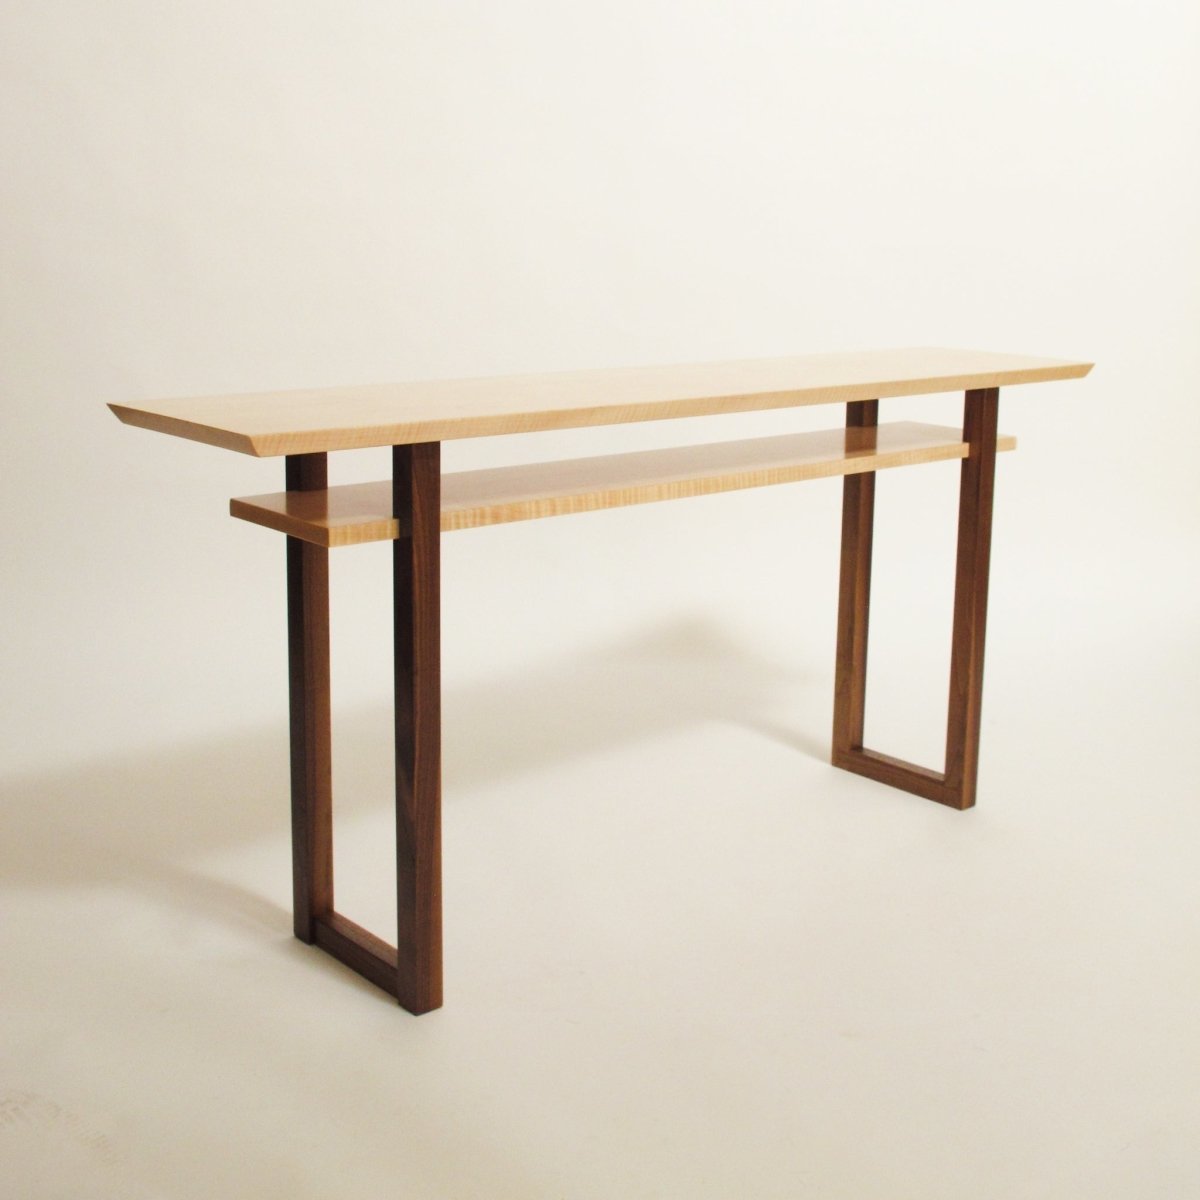 A minimalist art low console table by Mokuzai Furniture